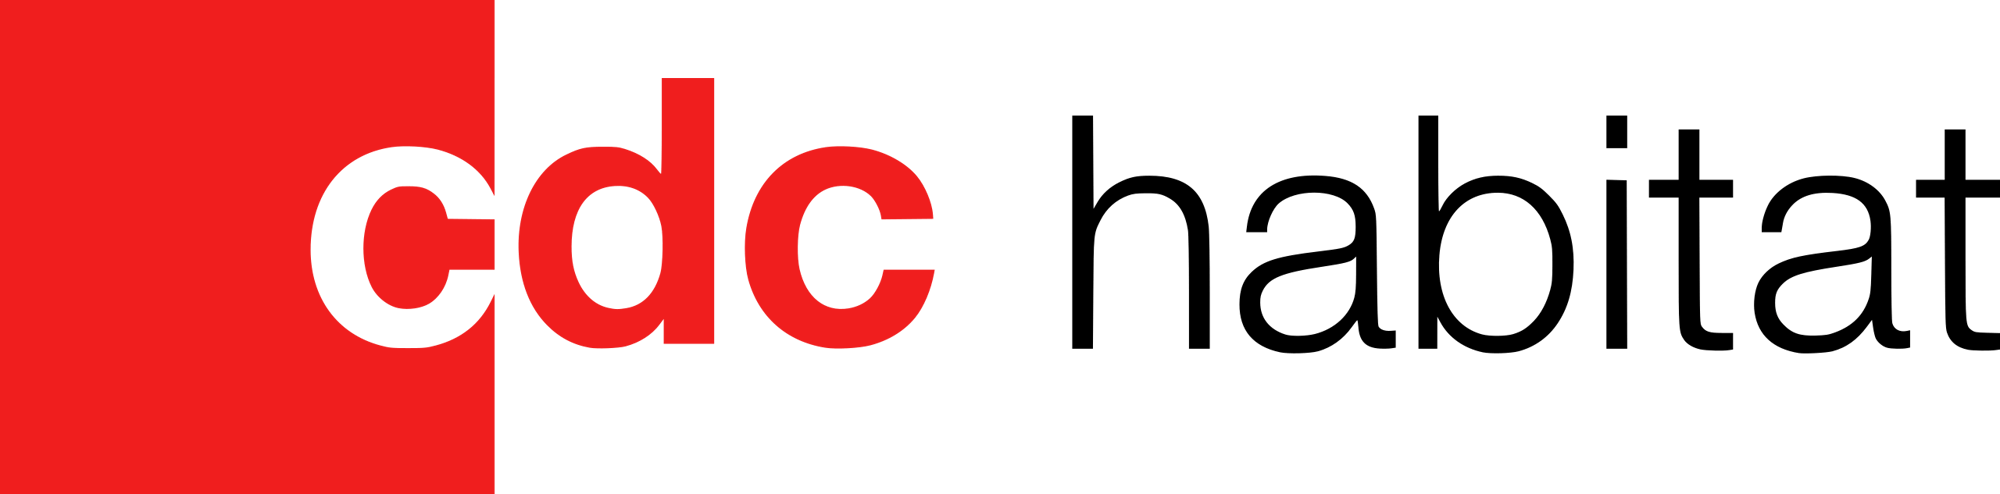 logo-cdc-habitat-united-heroes